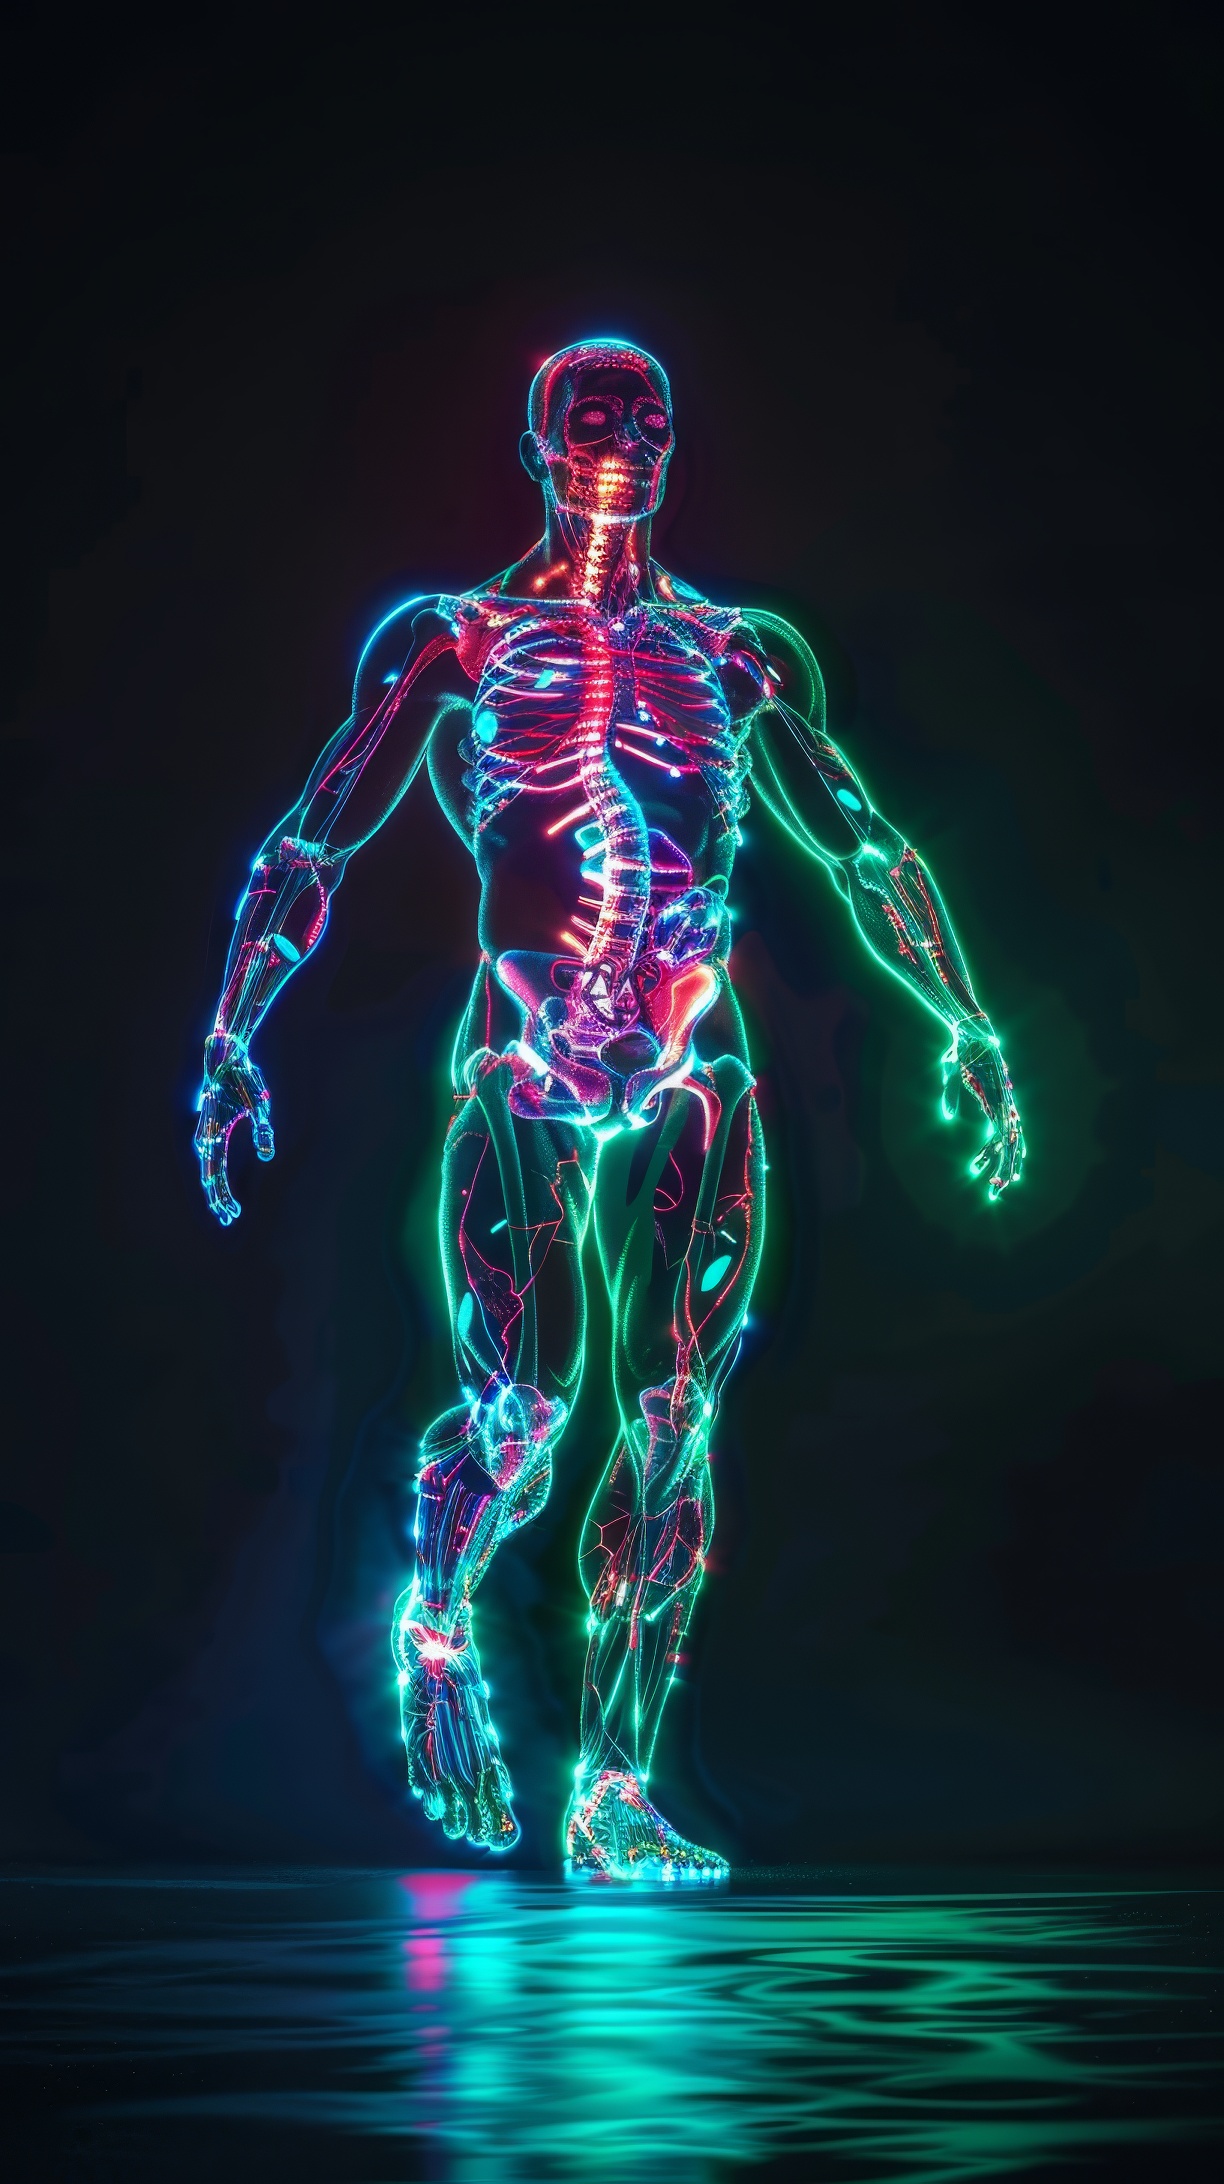 Illustration of glowing body standing man